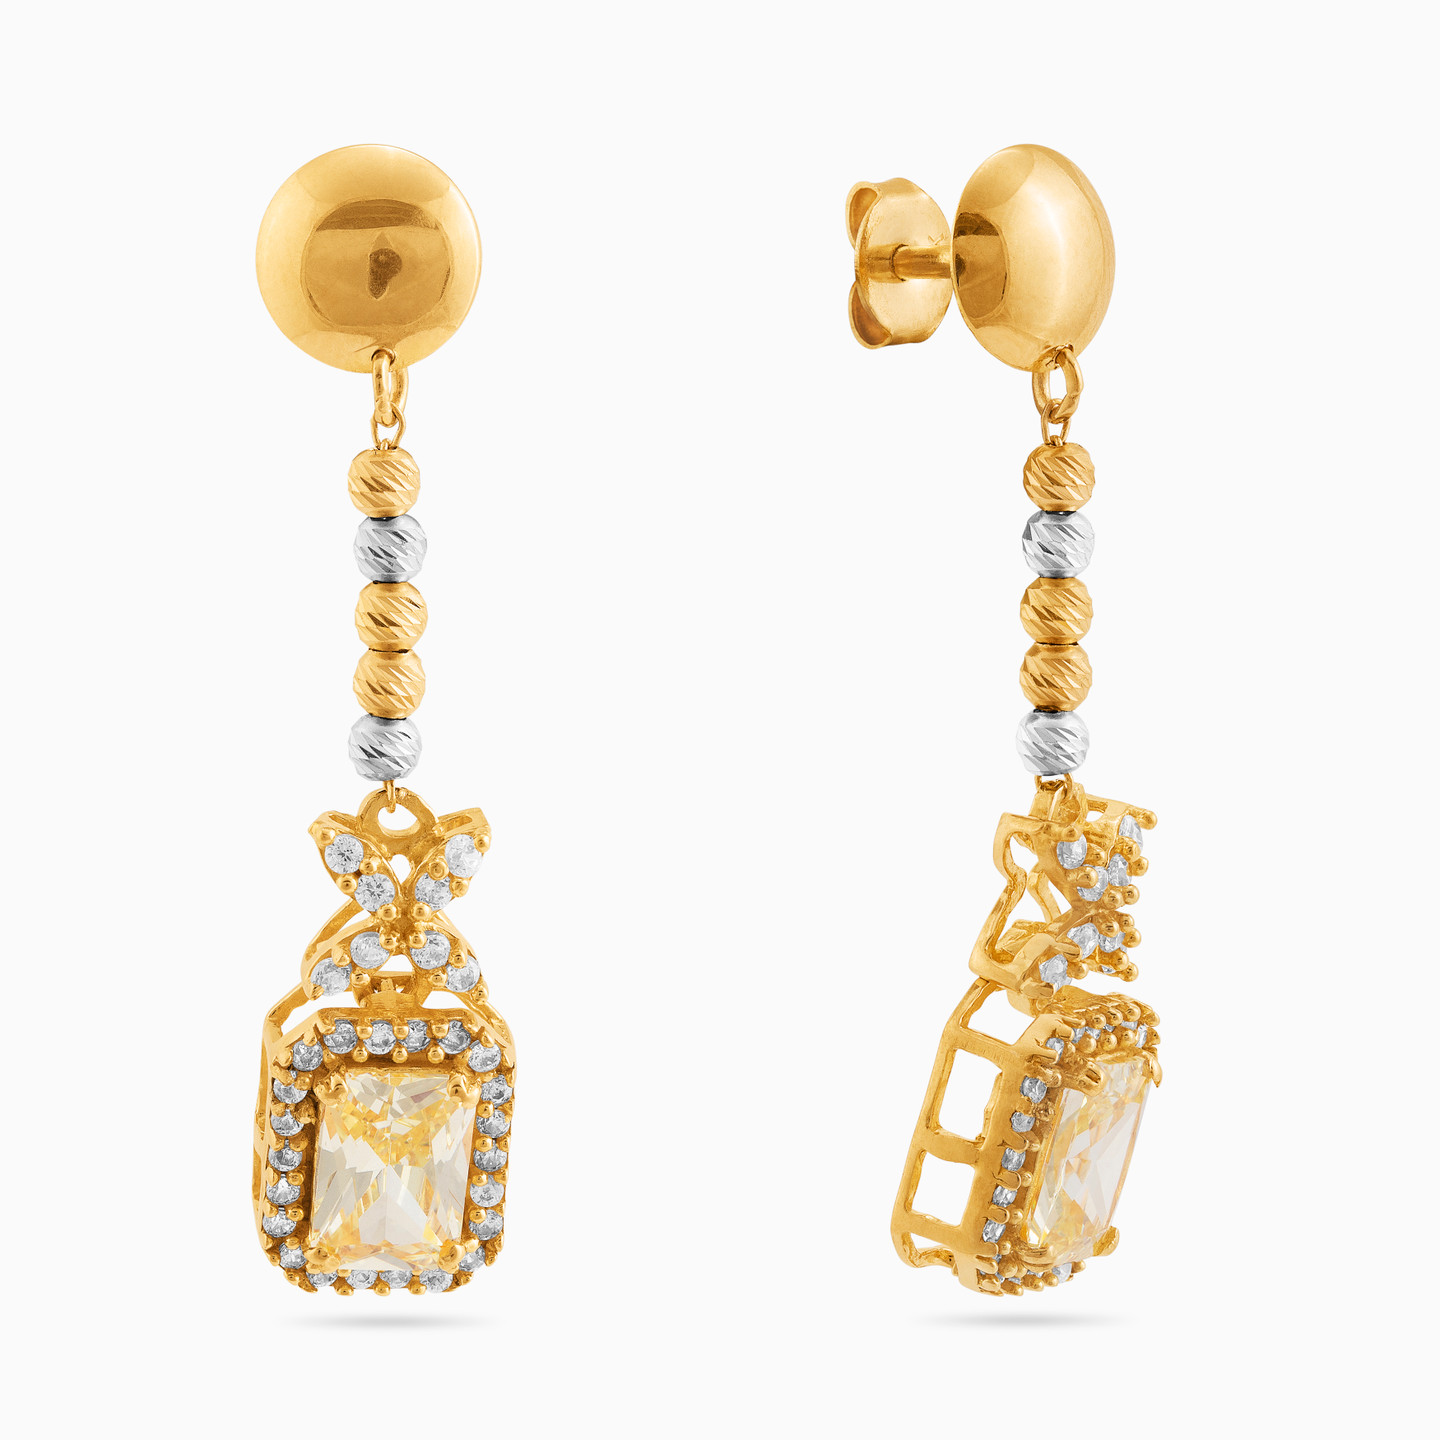 21K Gold Colored Stones Drop Earrings - 2